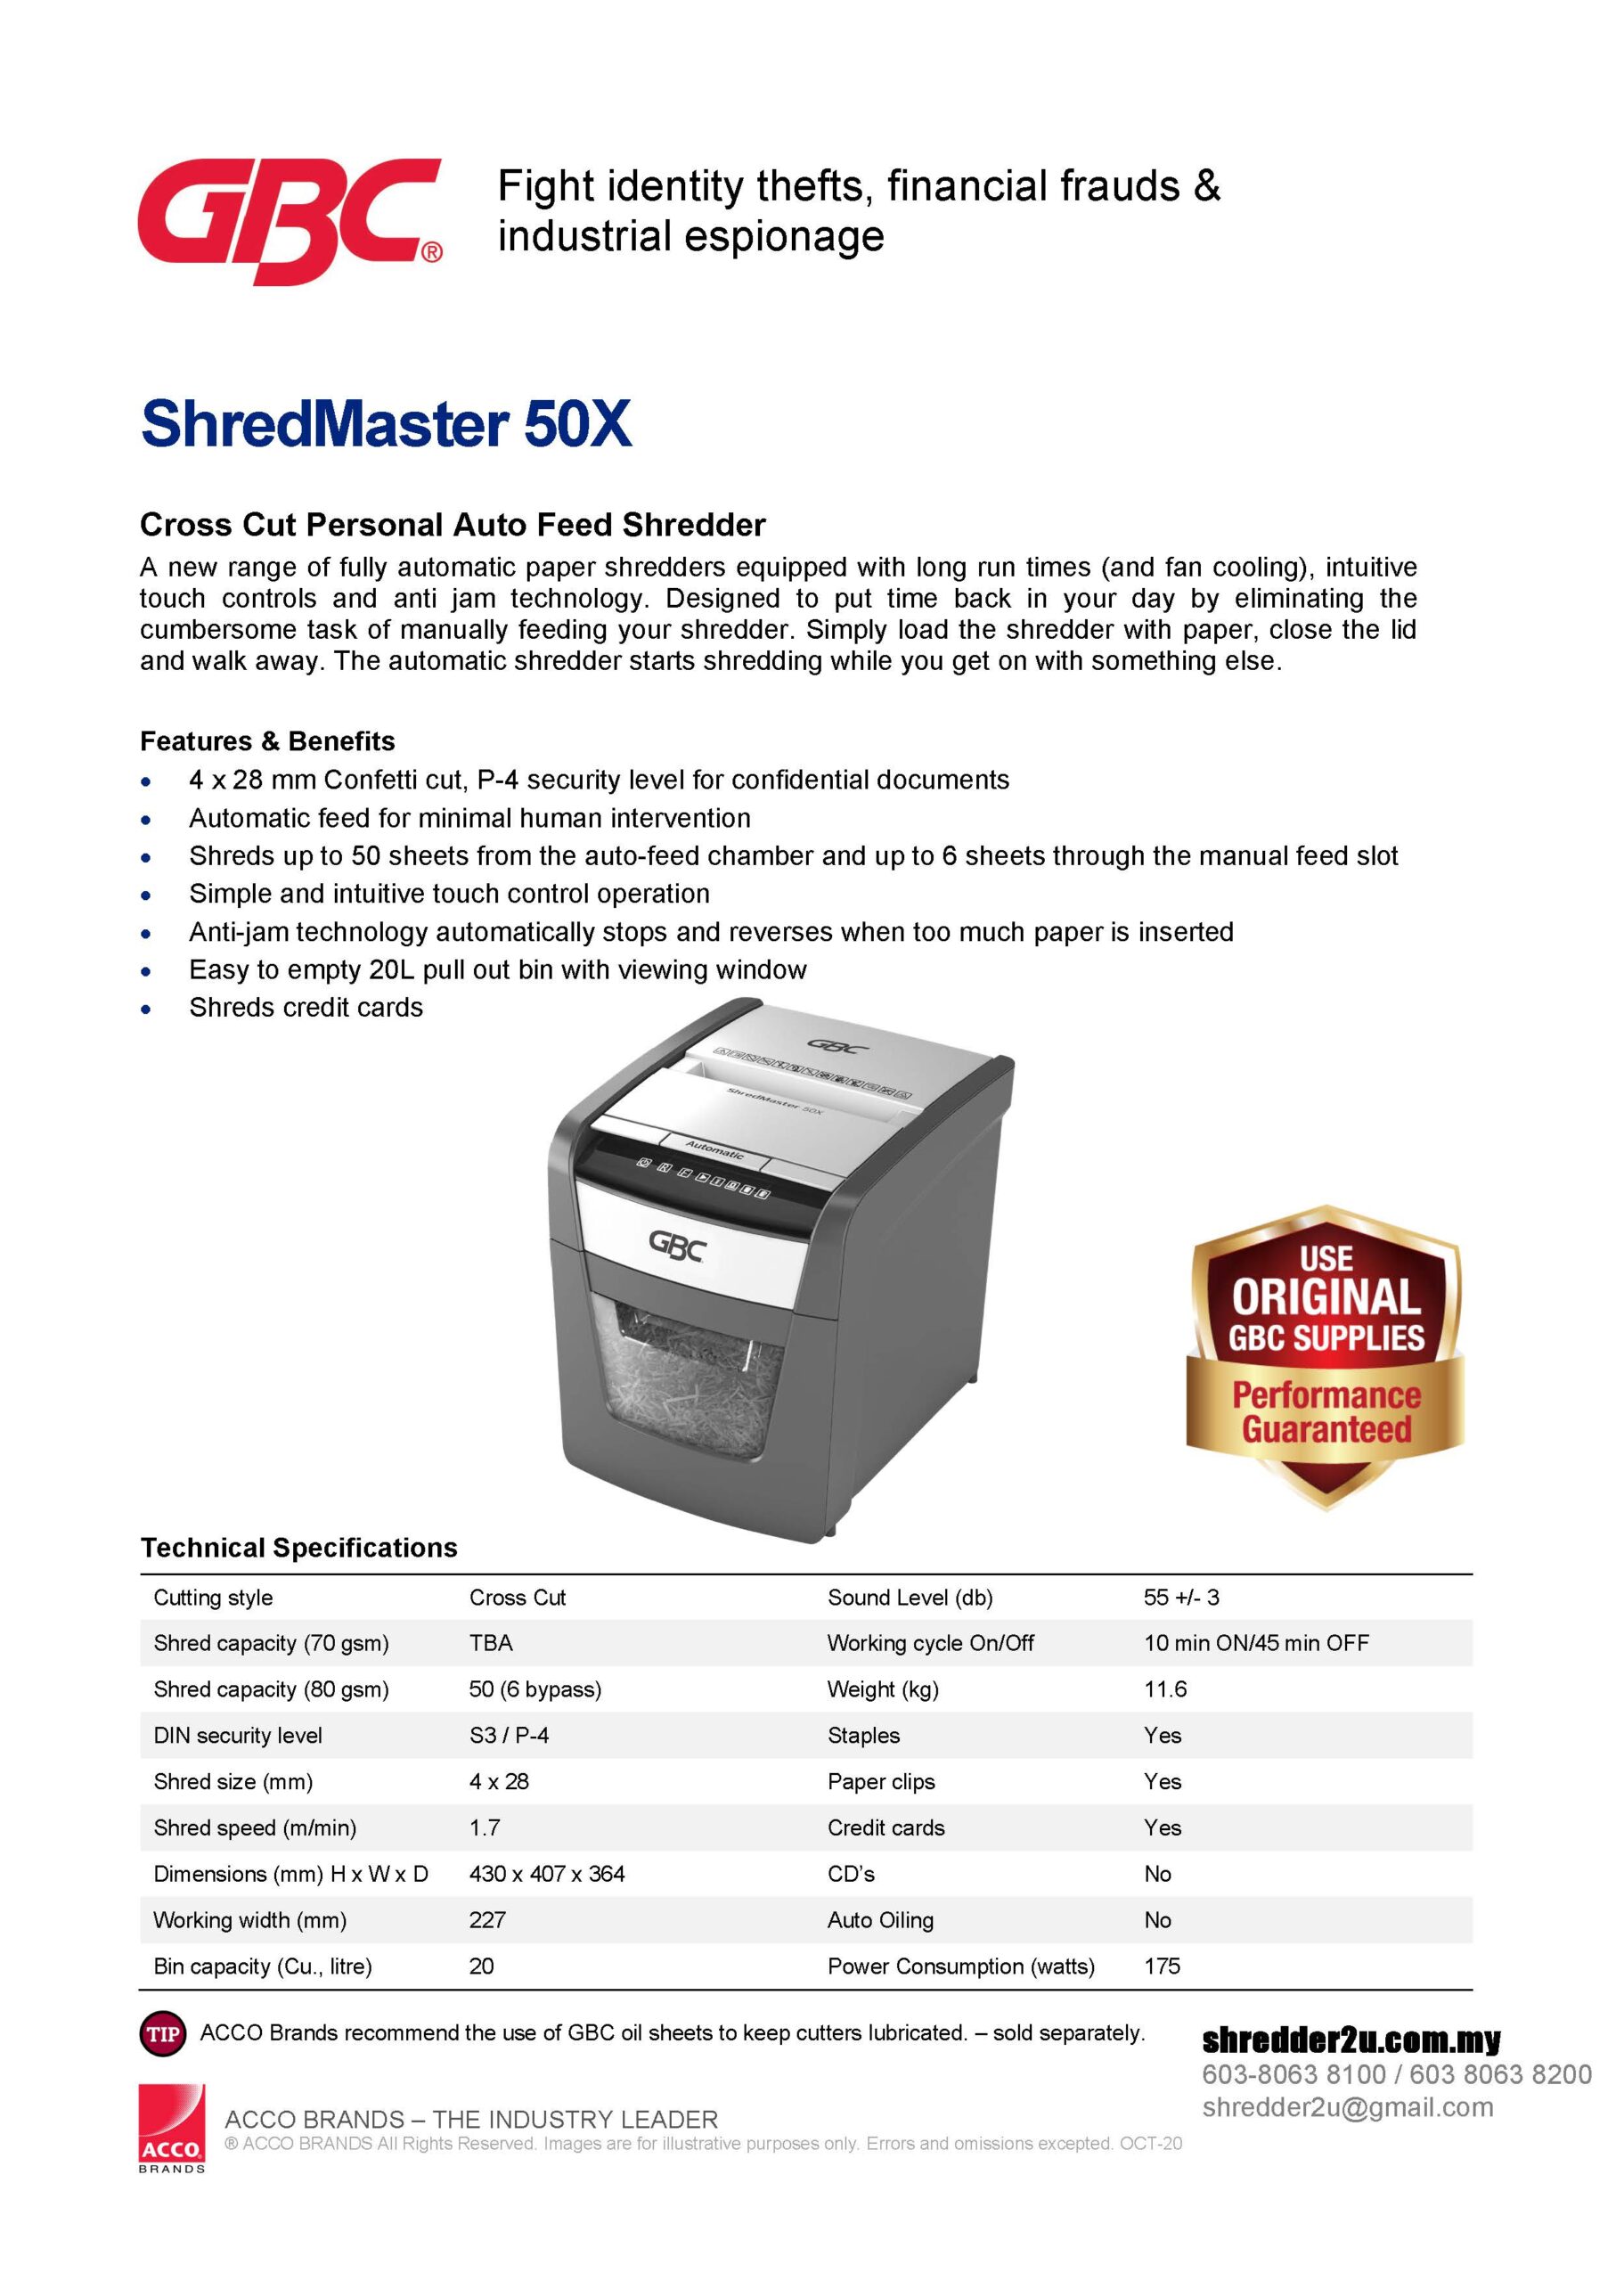 GBC ShredMaster 50X Specification